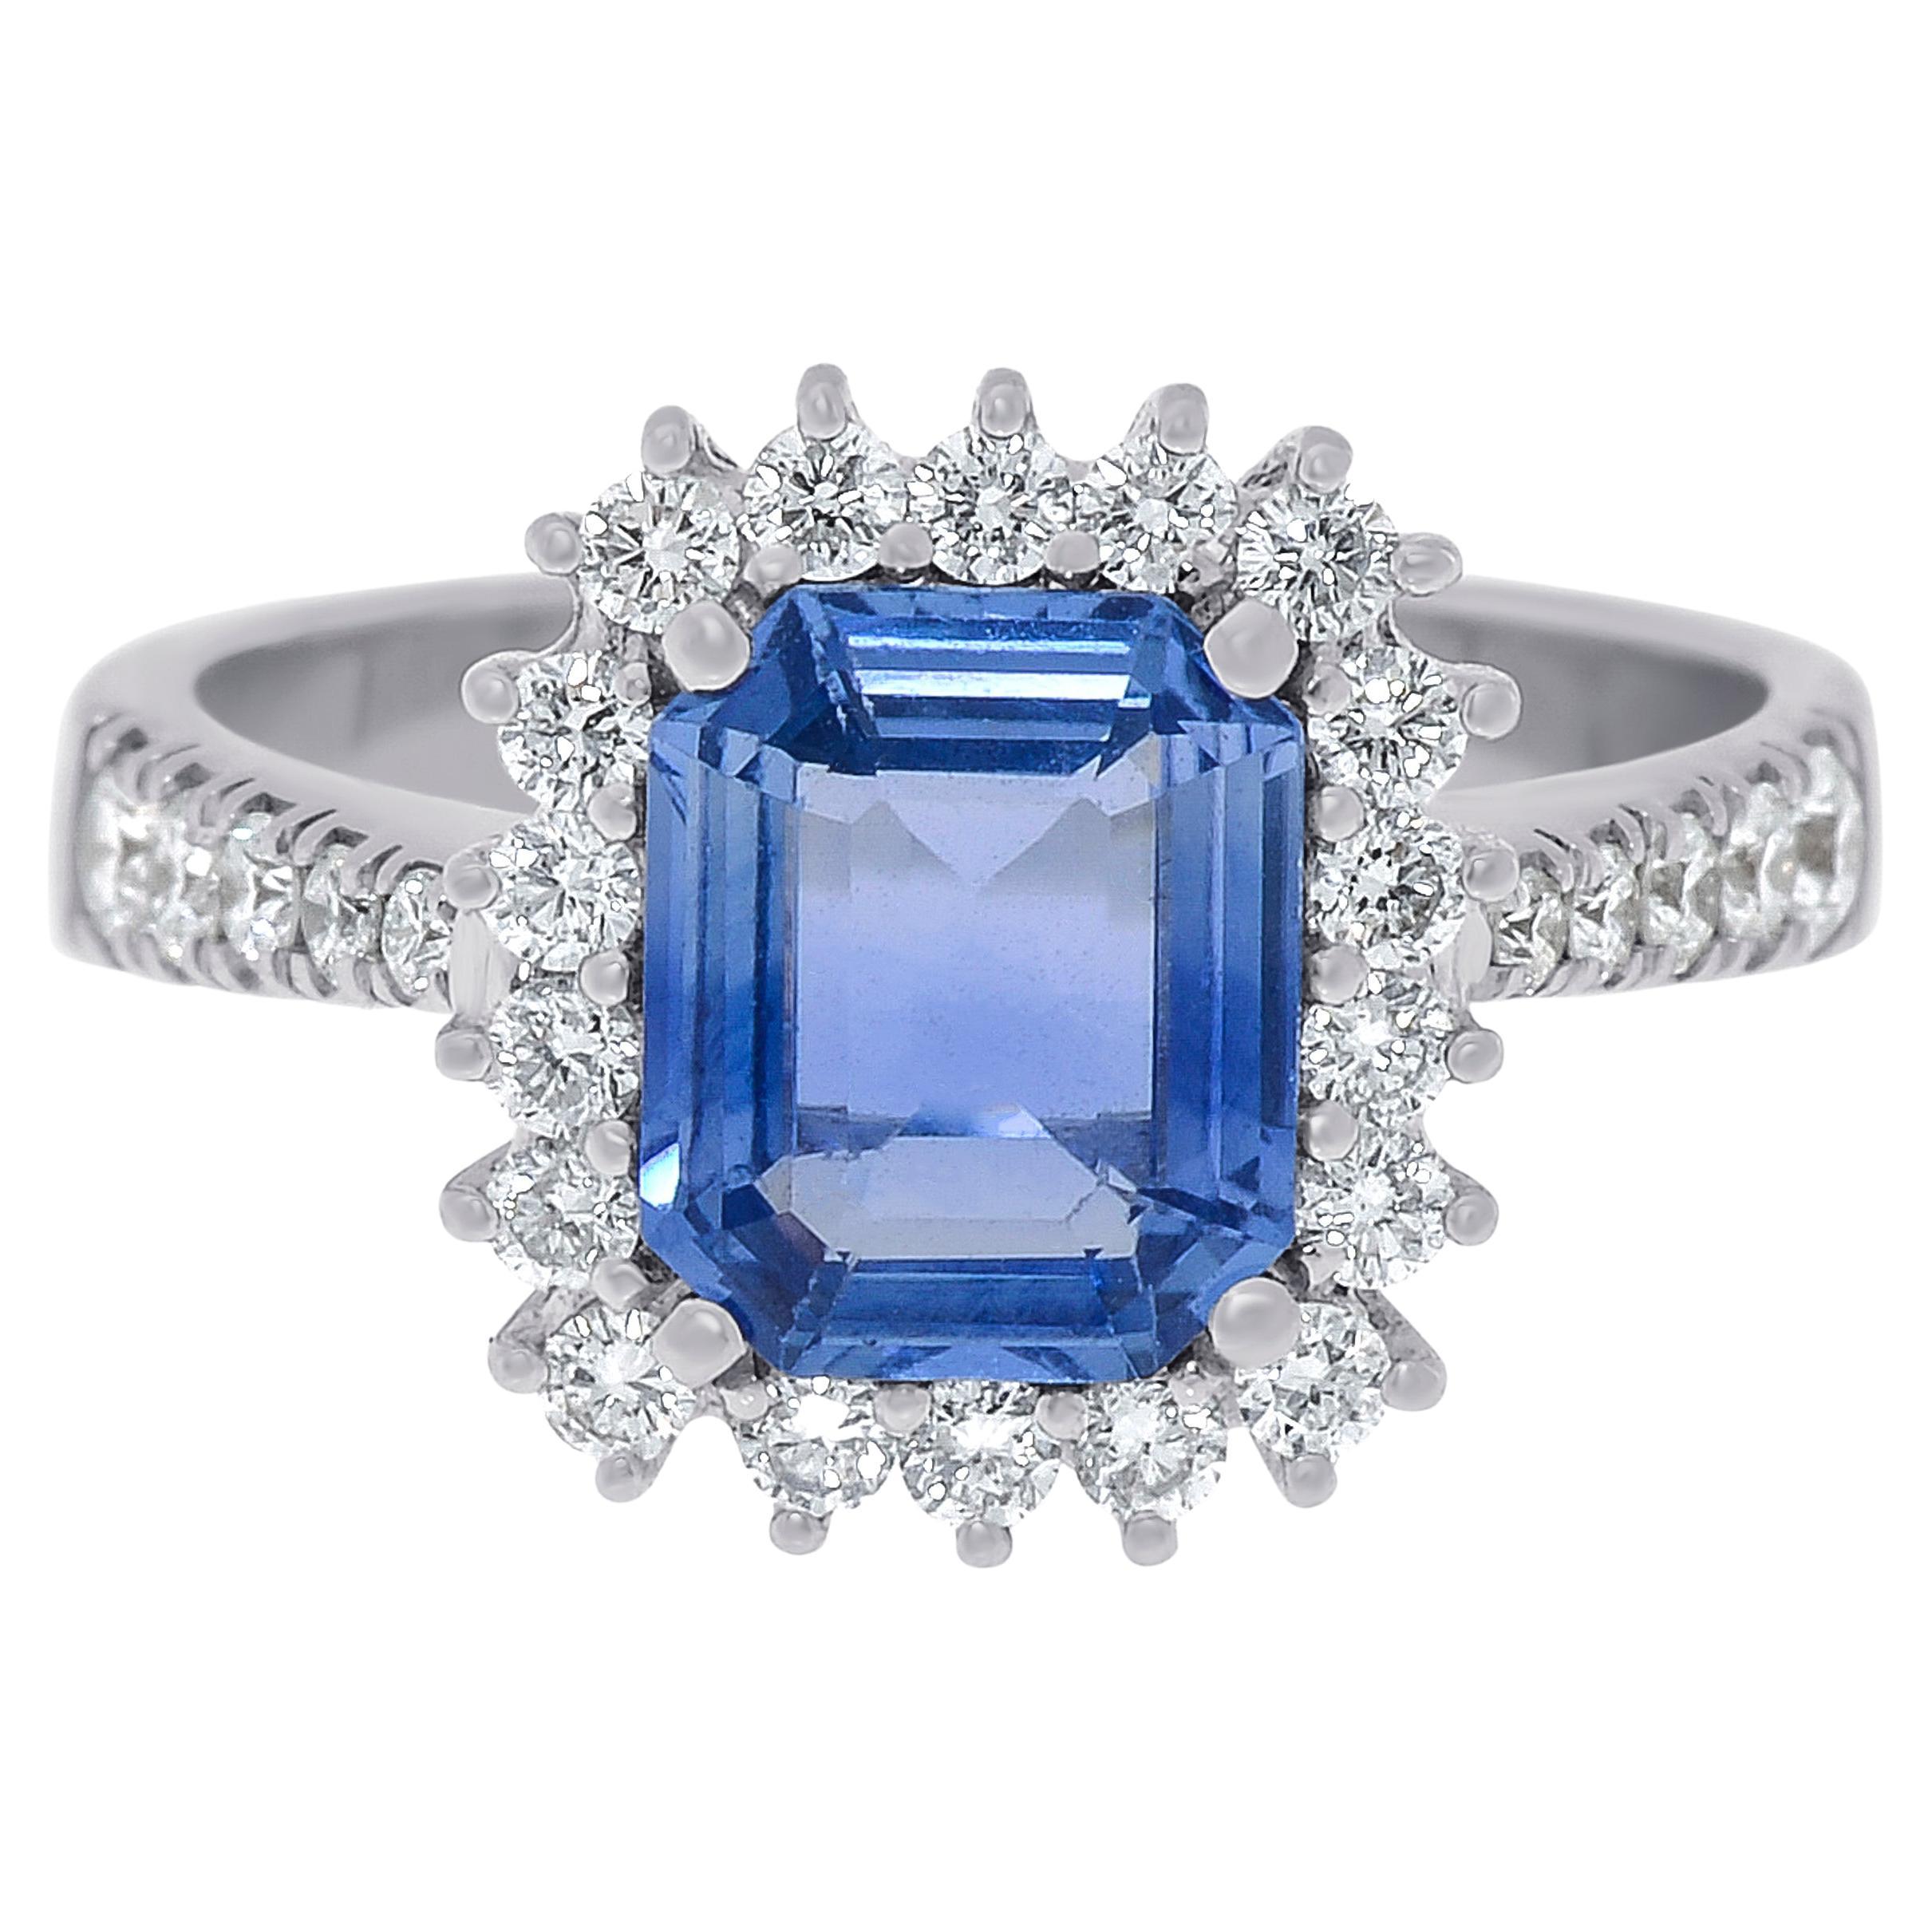 Zydo 18K White Gold Sapphire & Diamonds Cocktail Ring sz. 7 For Sale